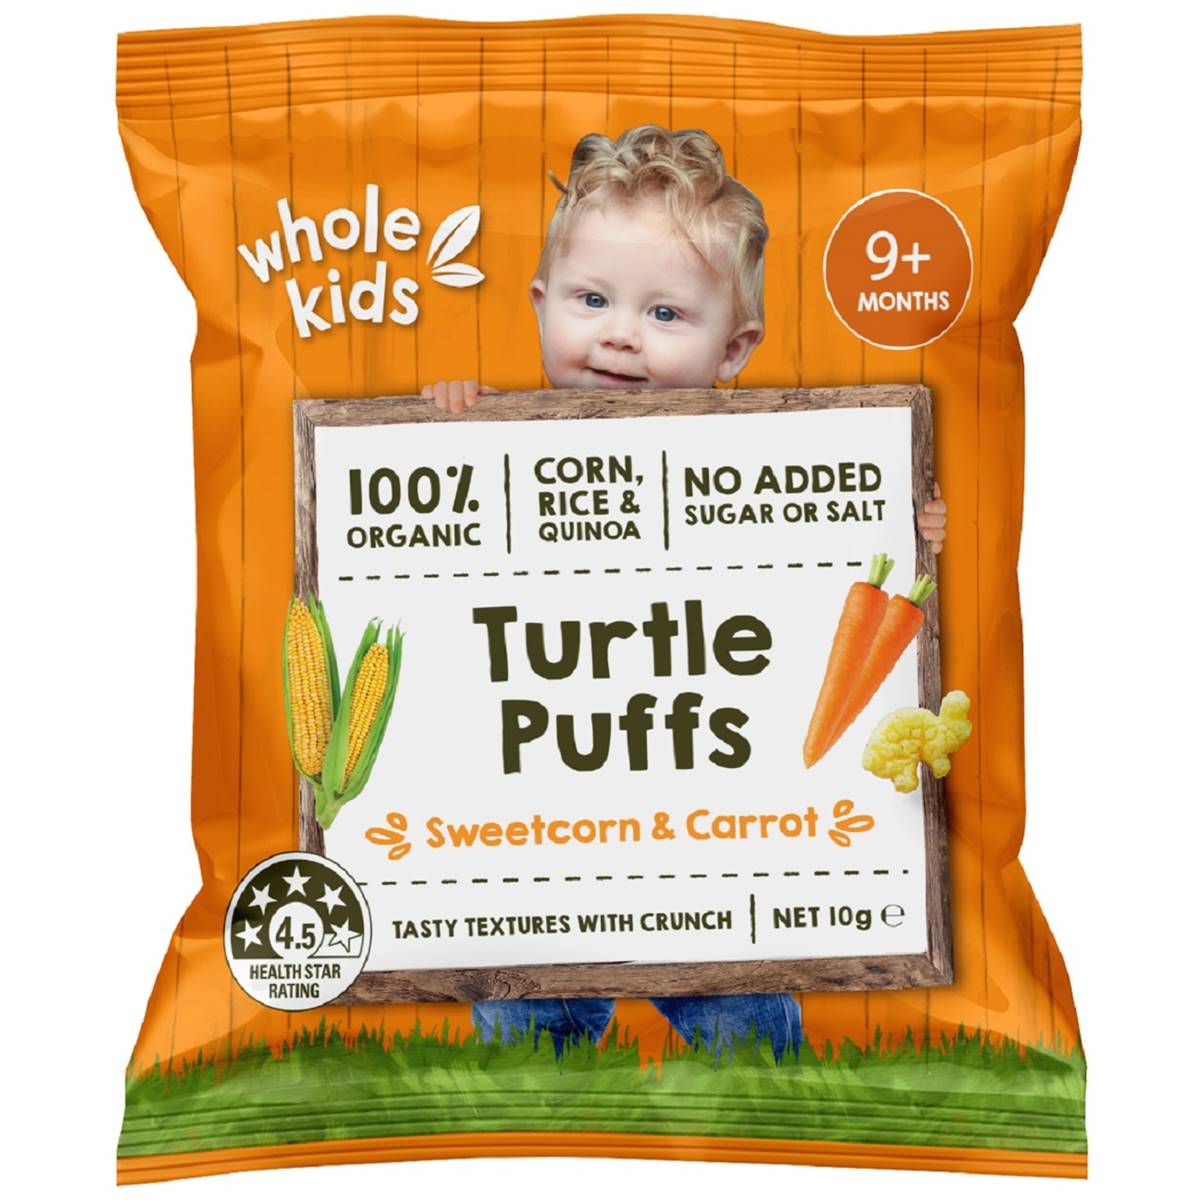 Calories in Whole Kids Organic Wholegrain Turtle Puffs Sweetcorn & Carrot